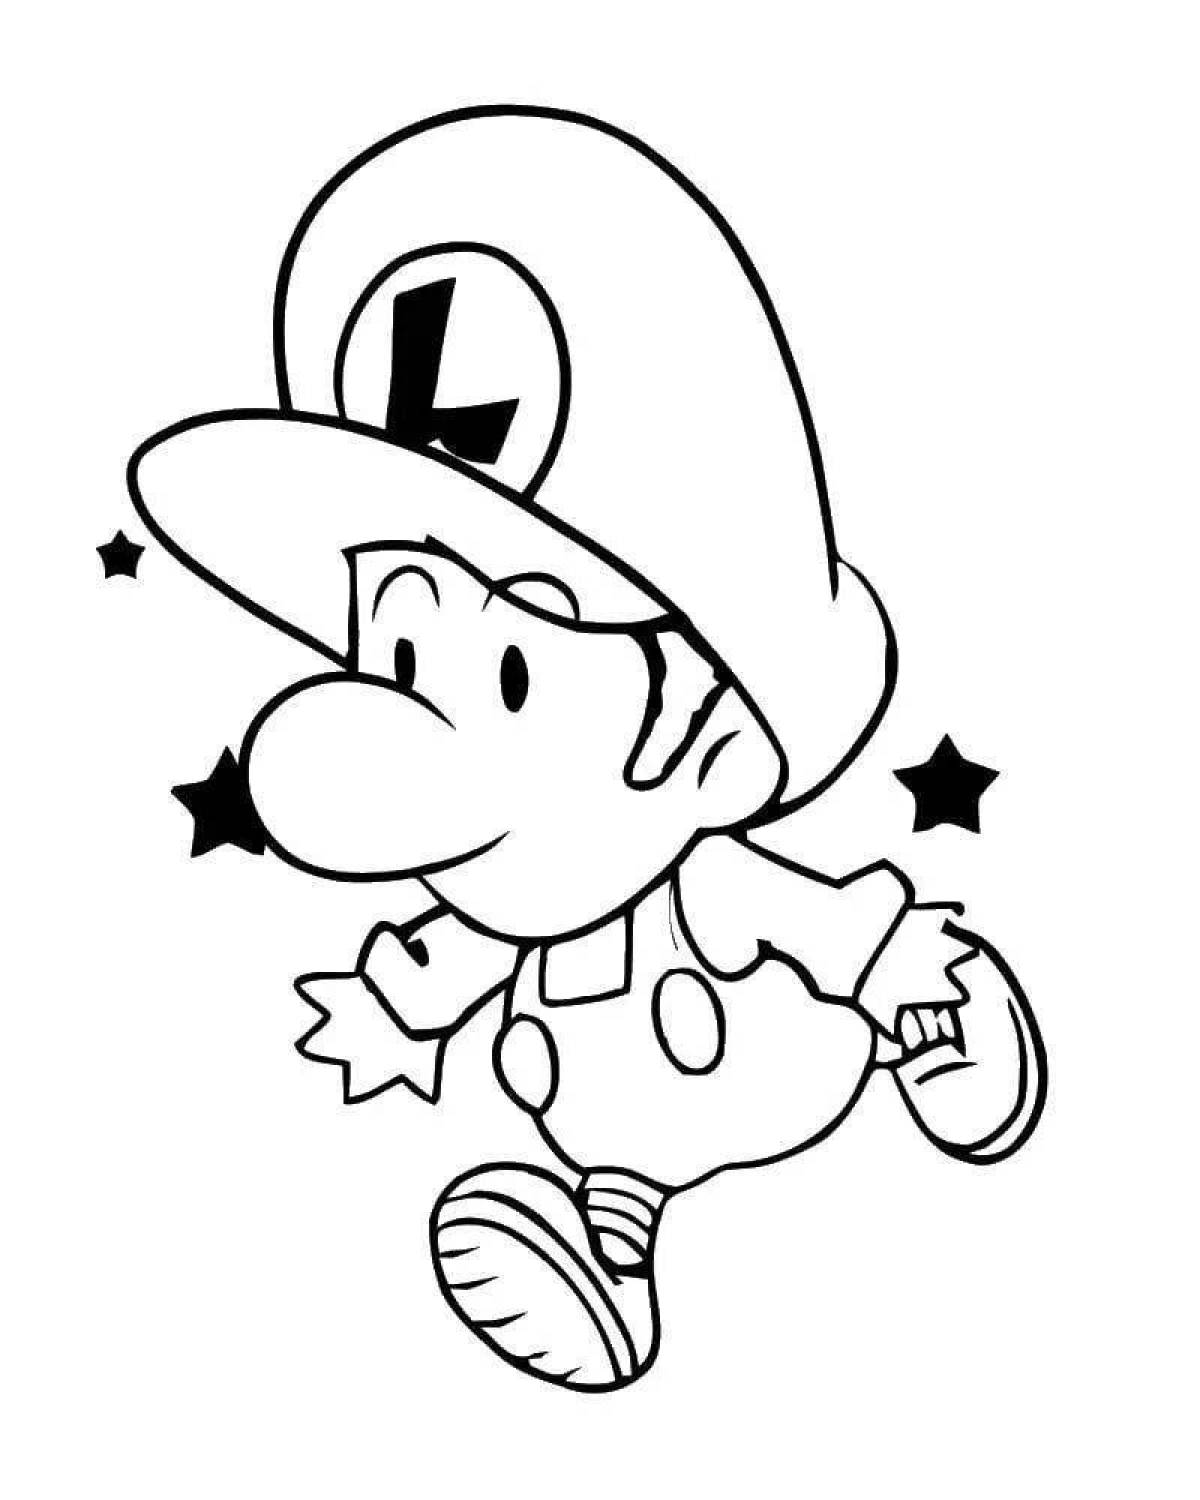 Luigi #10